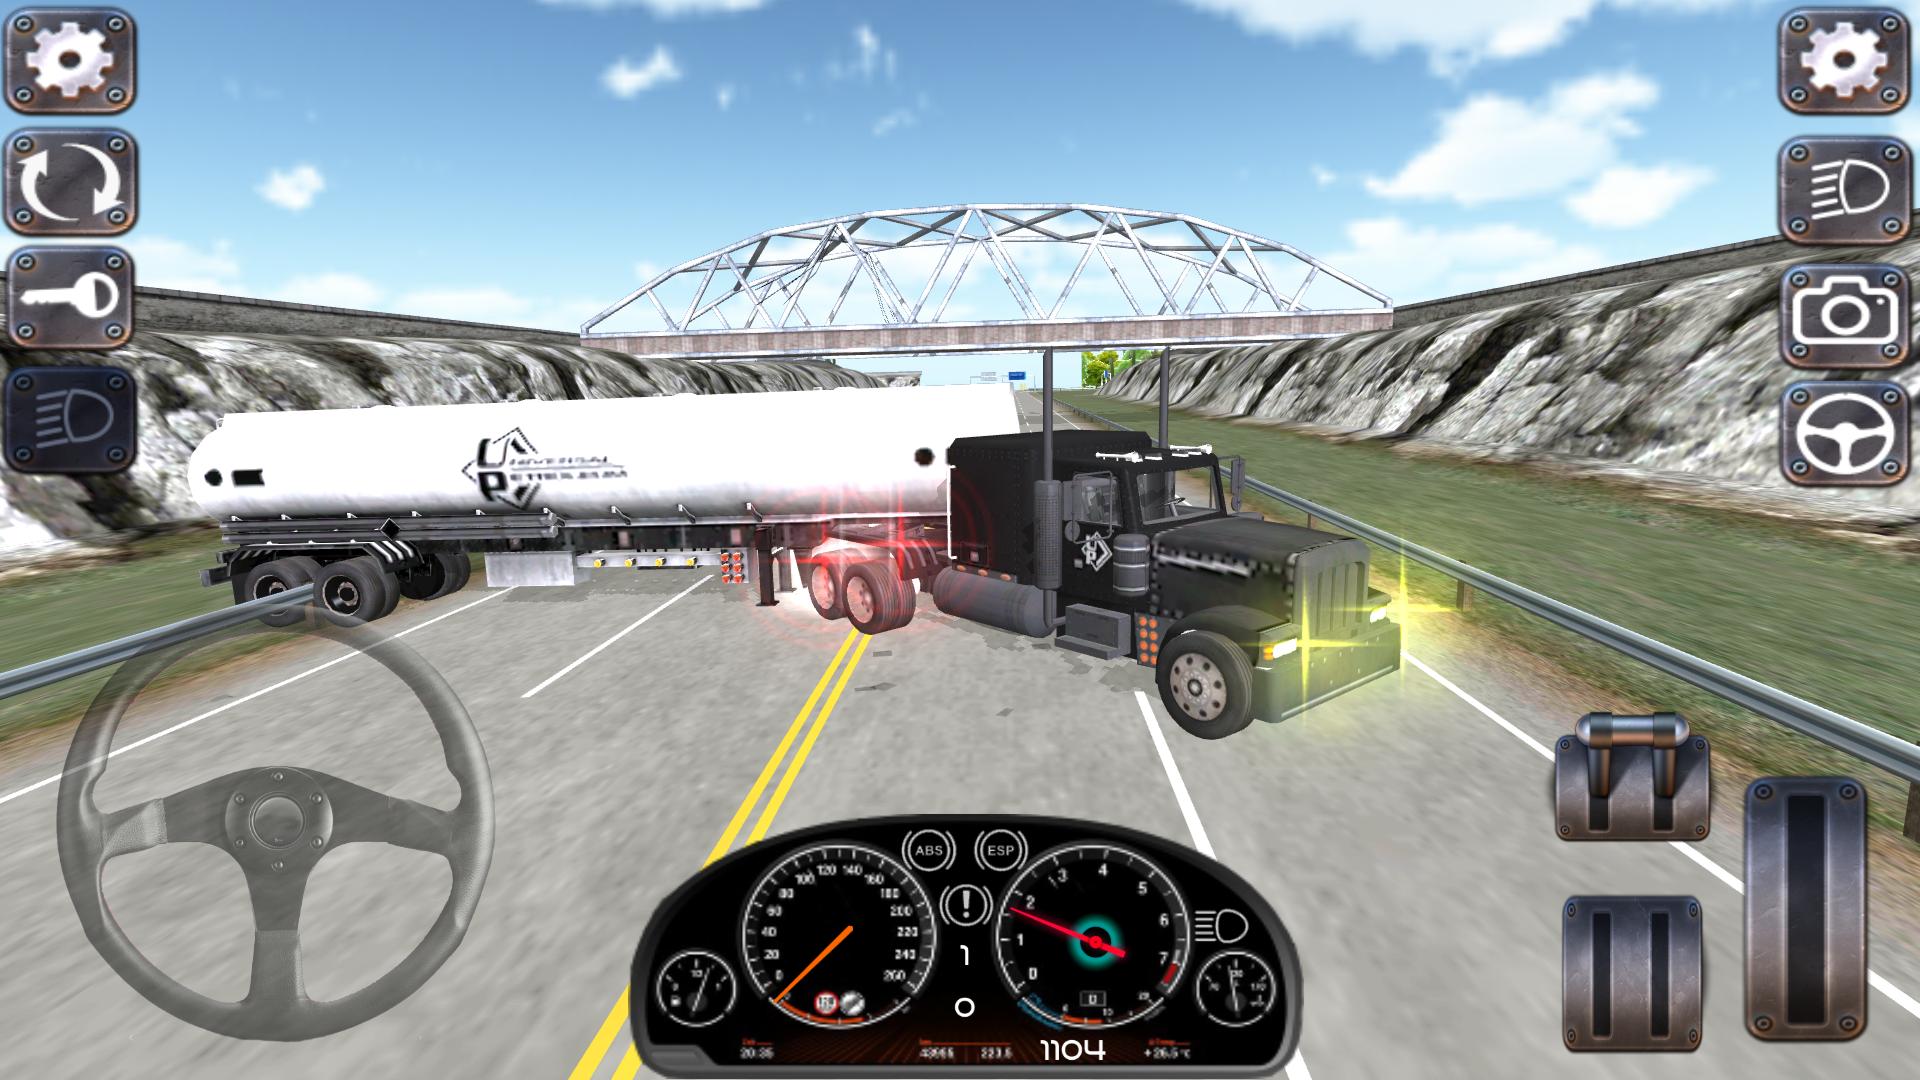 Игра симуляторы зломка. Евро трак симулятор 3. Симулятор евро трек симулятор 3. Euro Truck Simulator 3 на андроид. Евротрак 3 симулятор андроид.